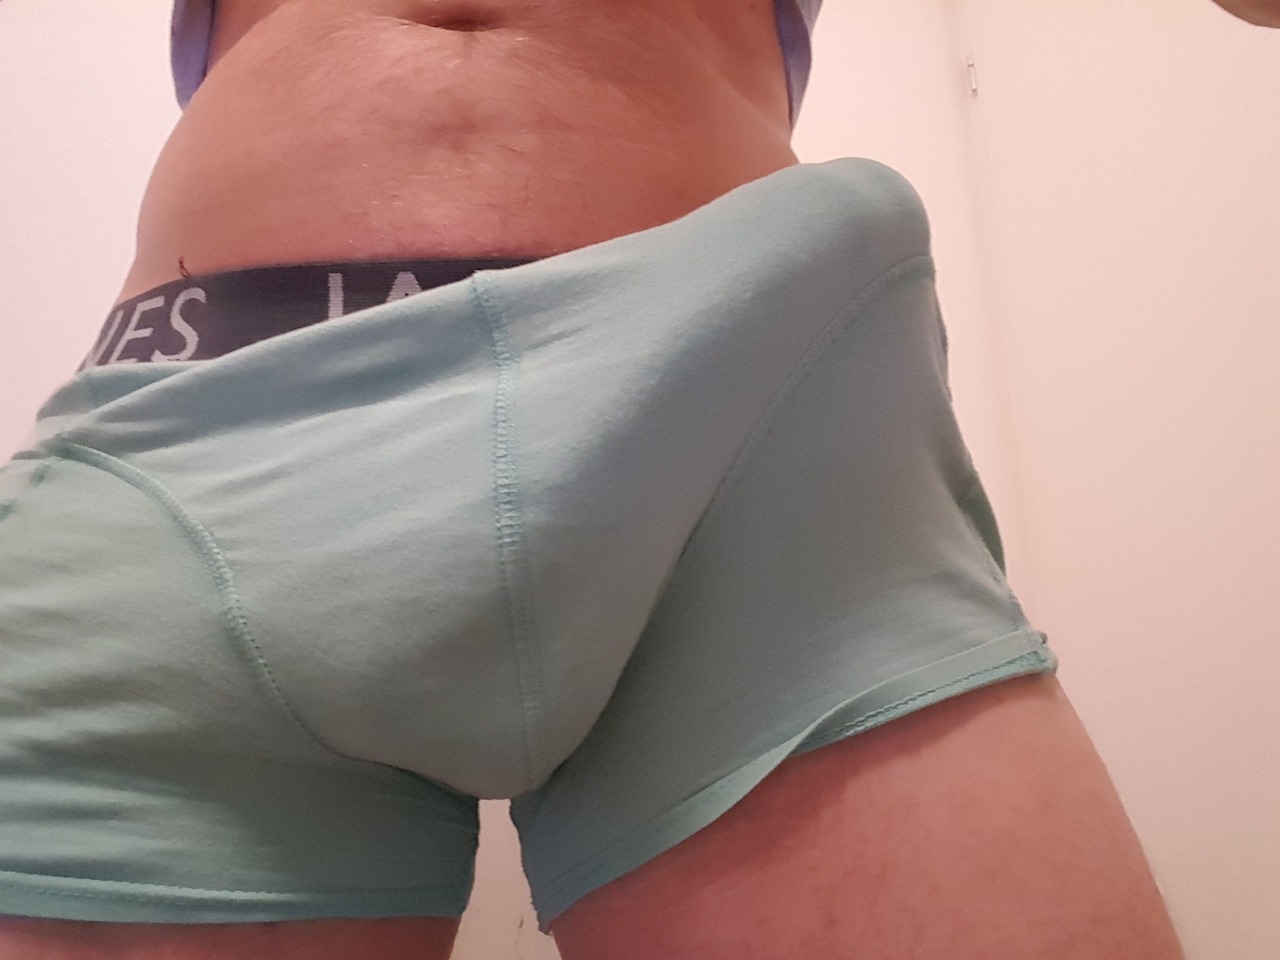 Hard Dick In Underwear 21